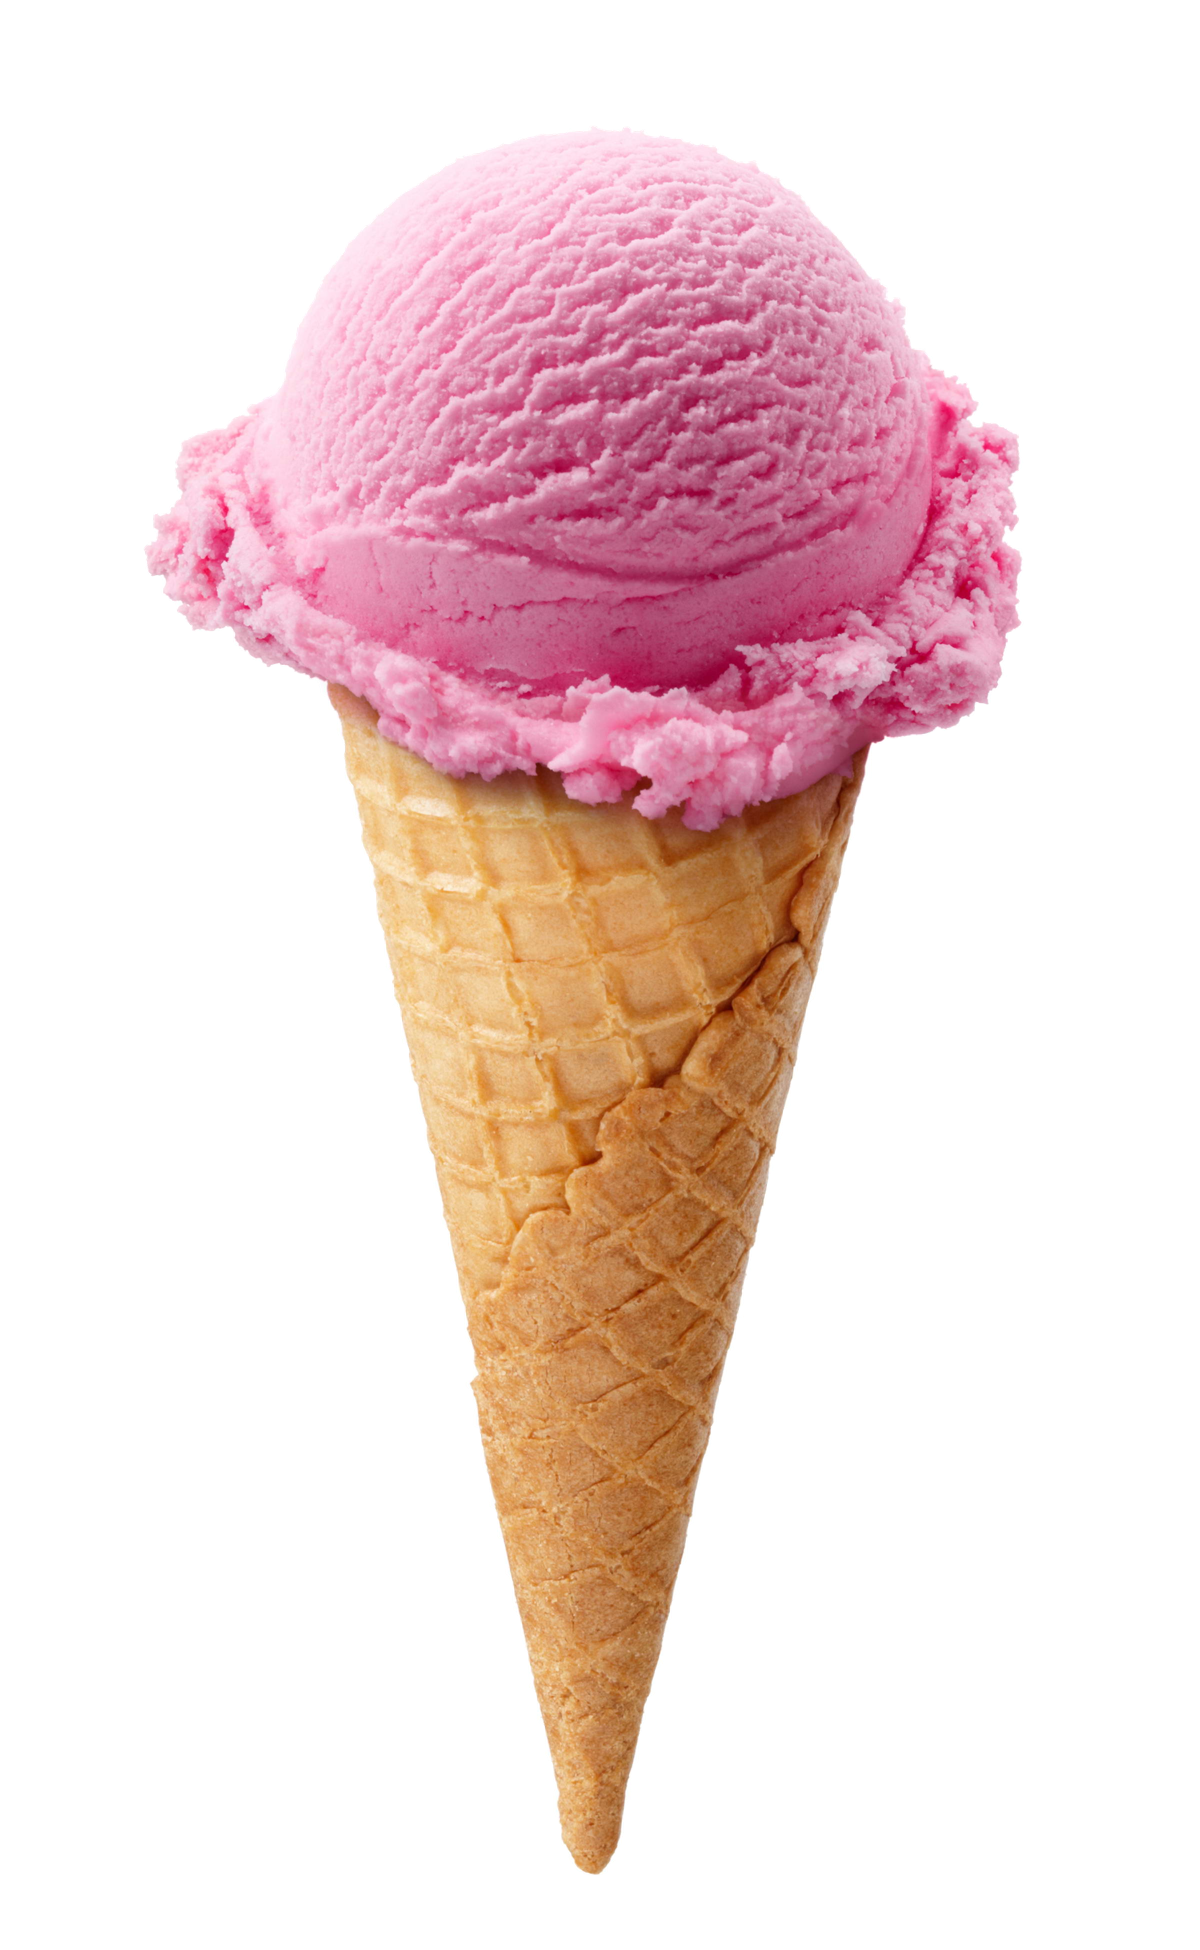 Ice Cream Scoop PNG Images